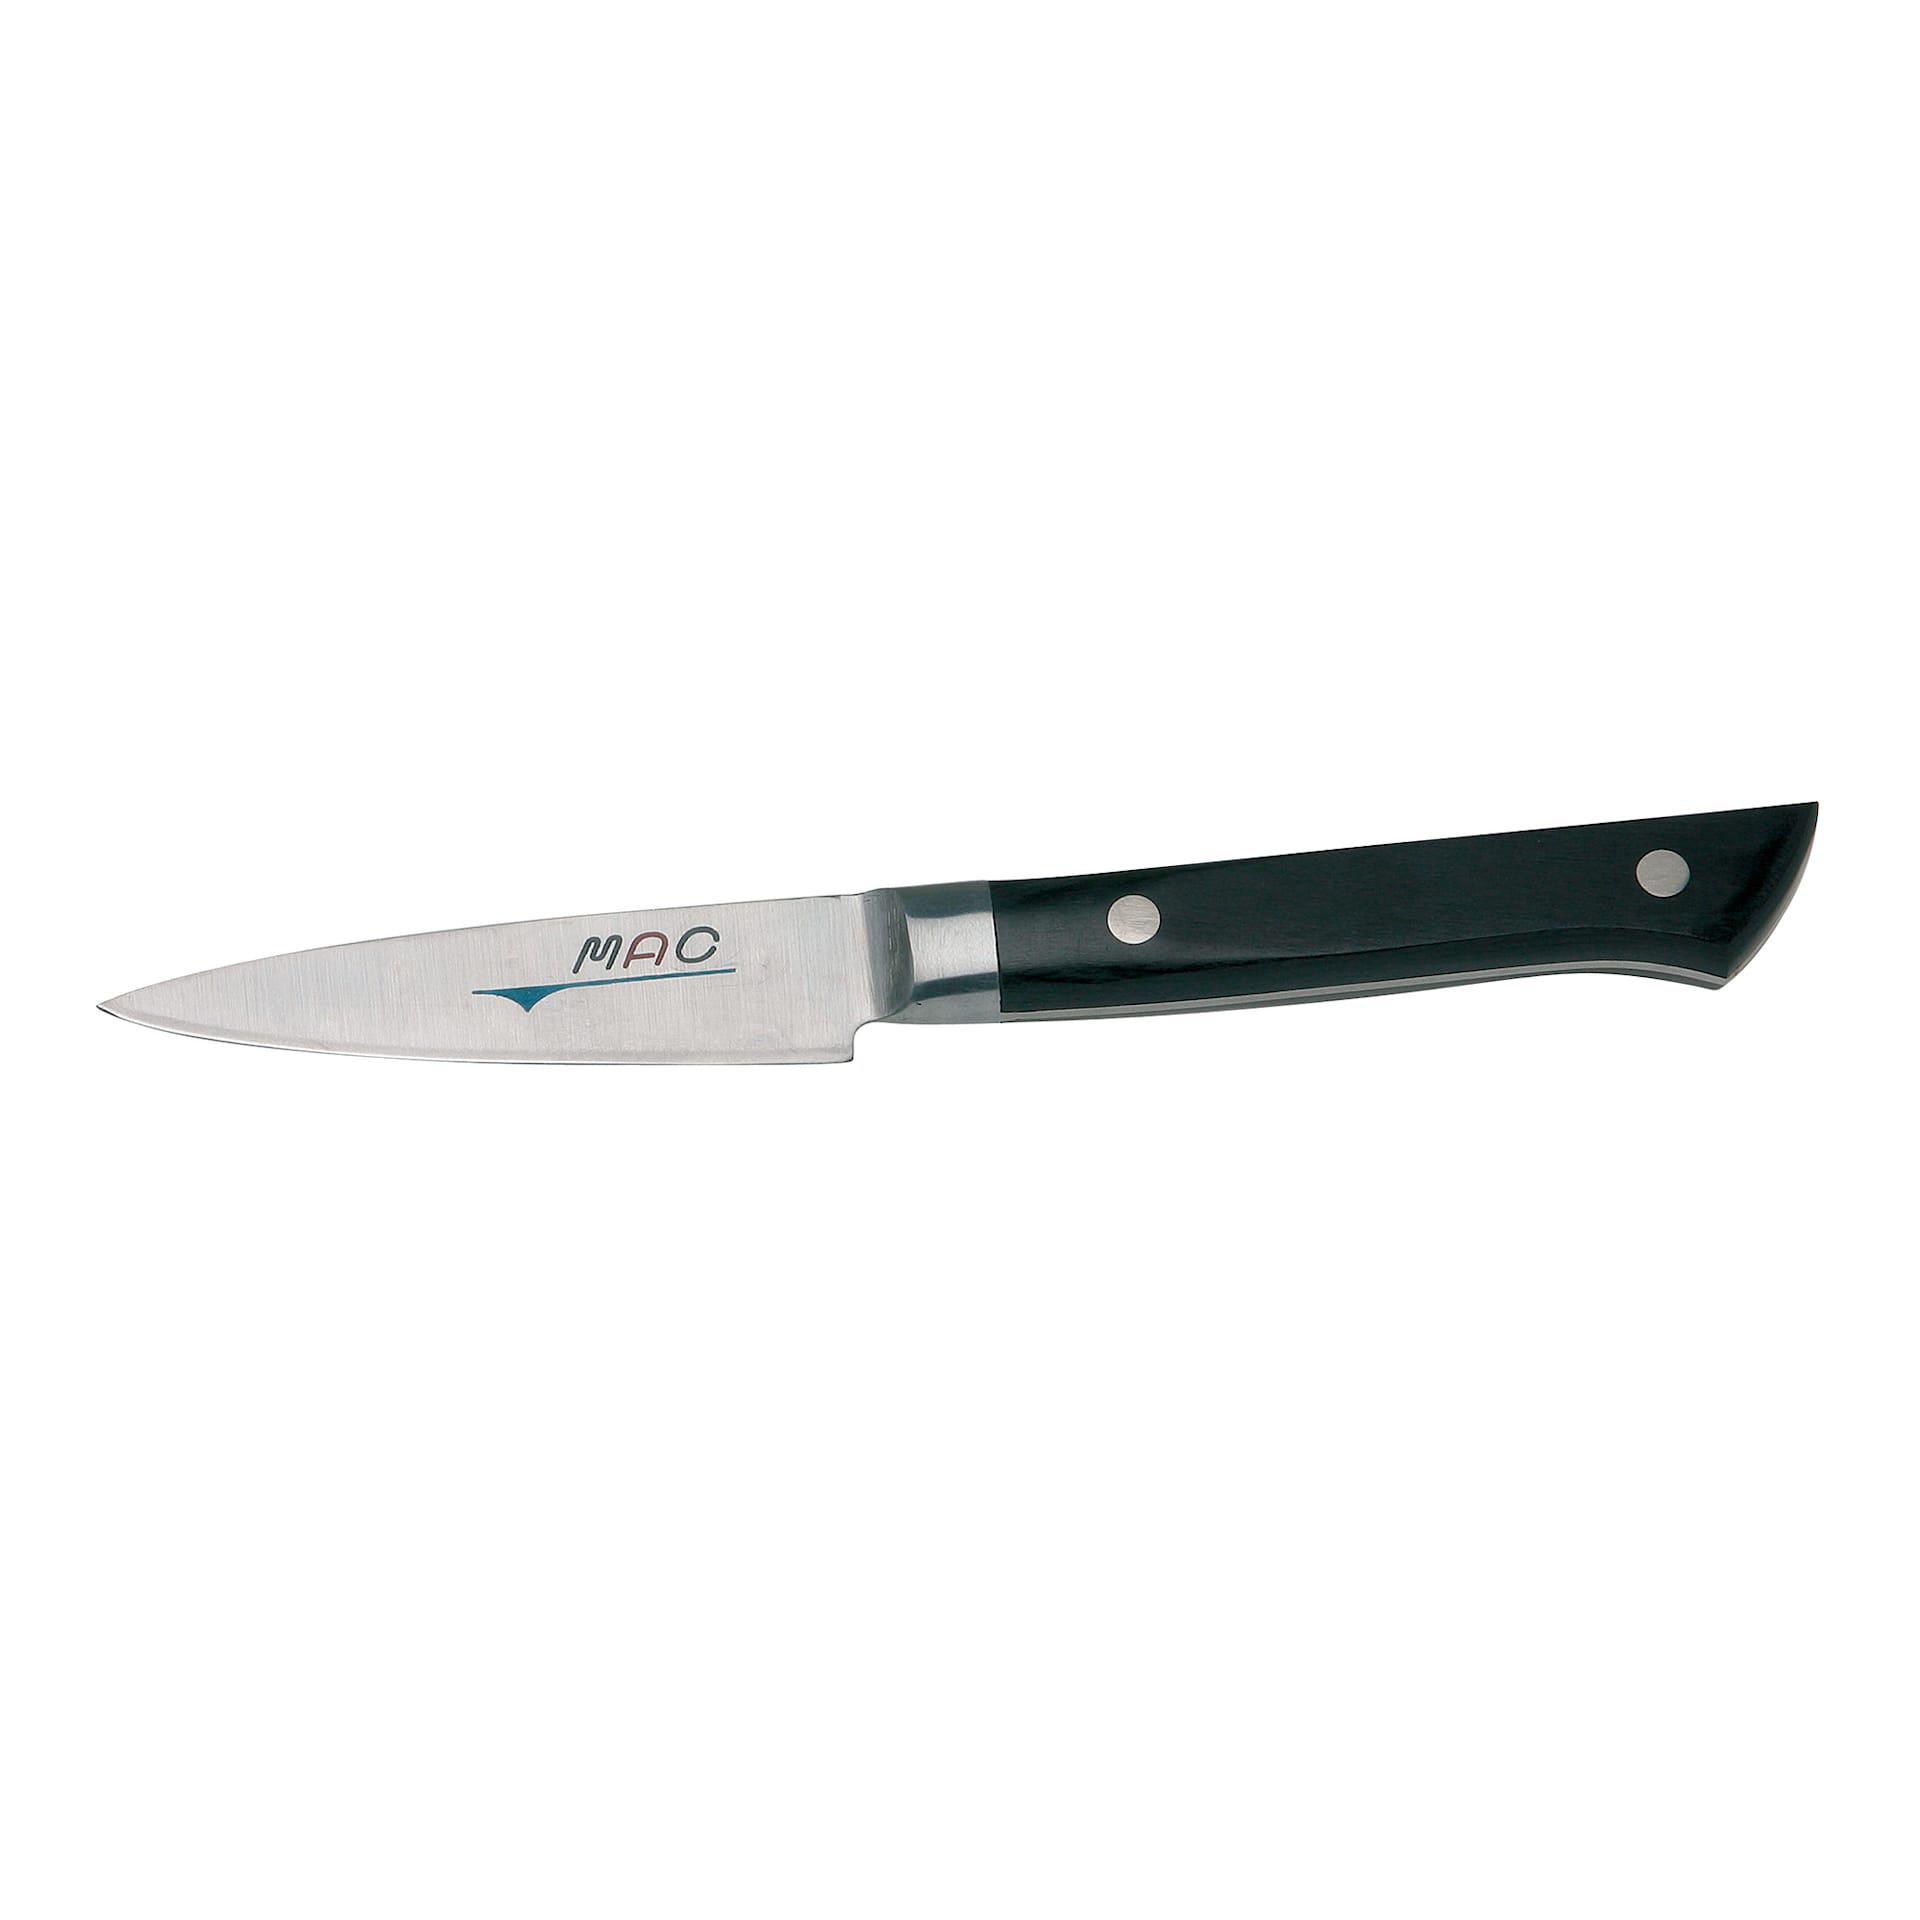 Pro - Vegetable knife, 8 cm - MAC - NO GA